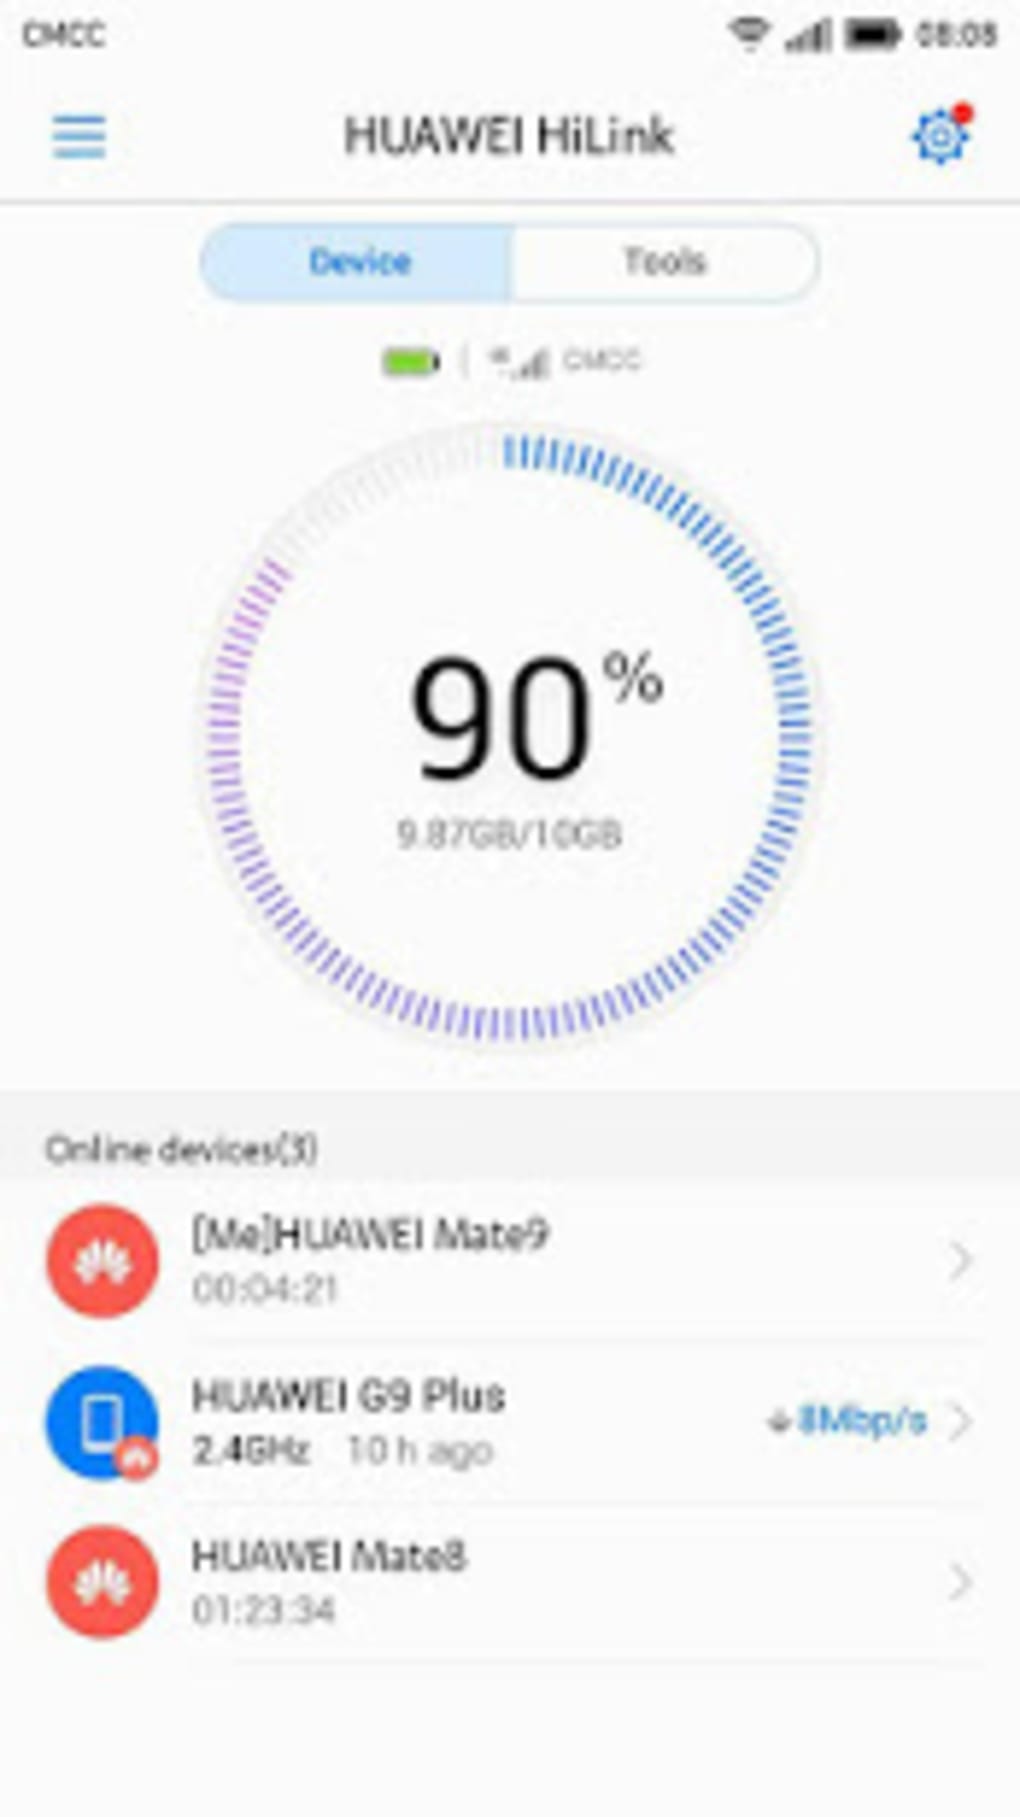 huawei hilink app download